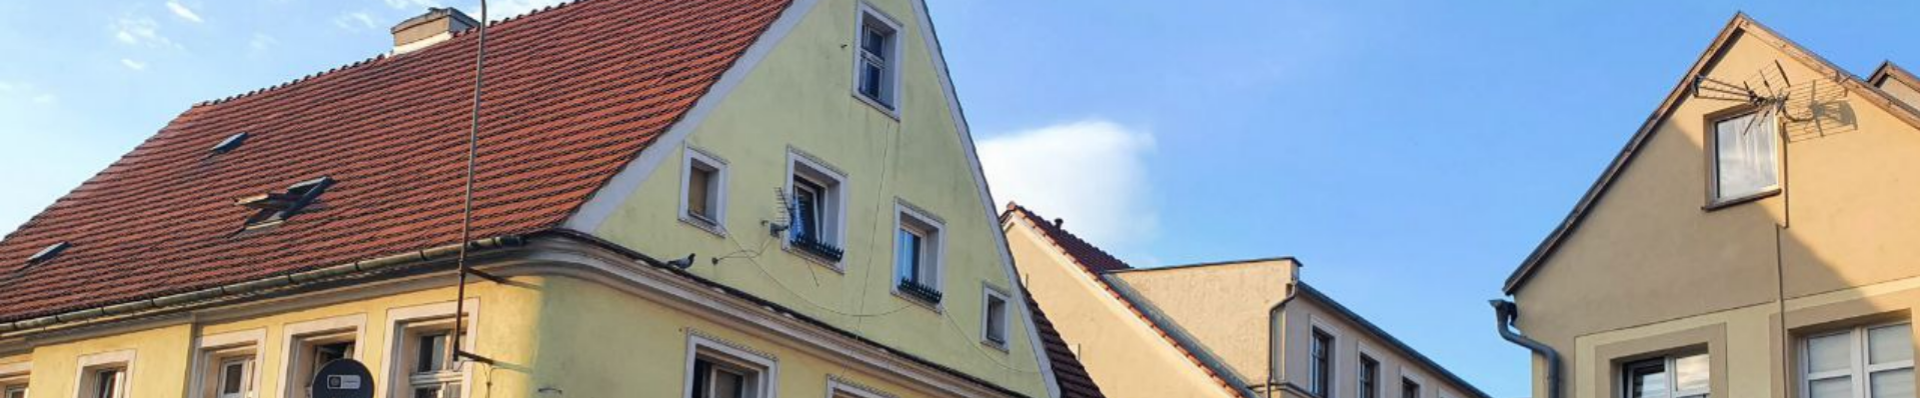 Tarif­ana­ly­se: Wohn­ge­bäu­de­ver­si­che­rung der Alli­anz (Stand 10.2019 bzw. 07.2020)